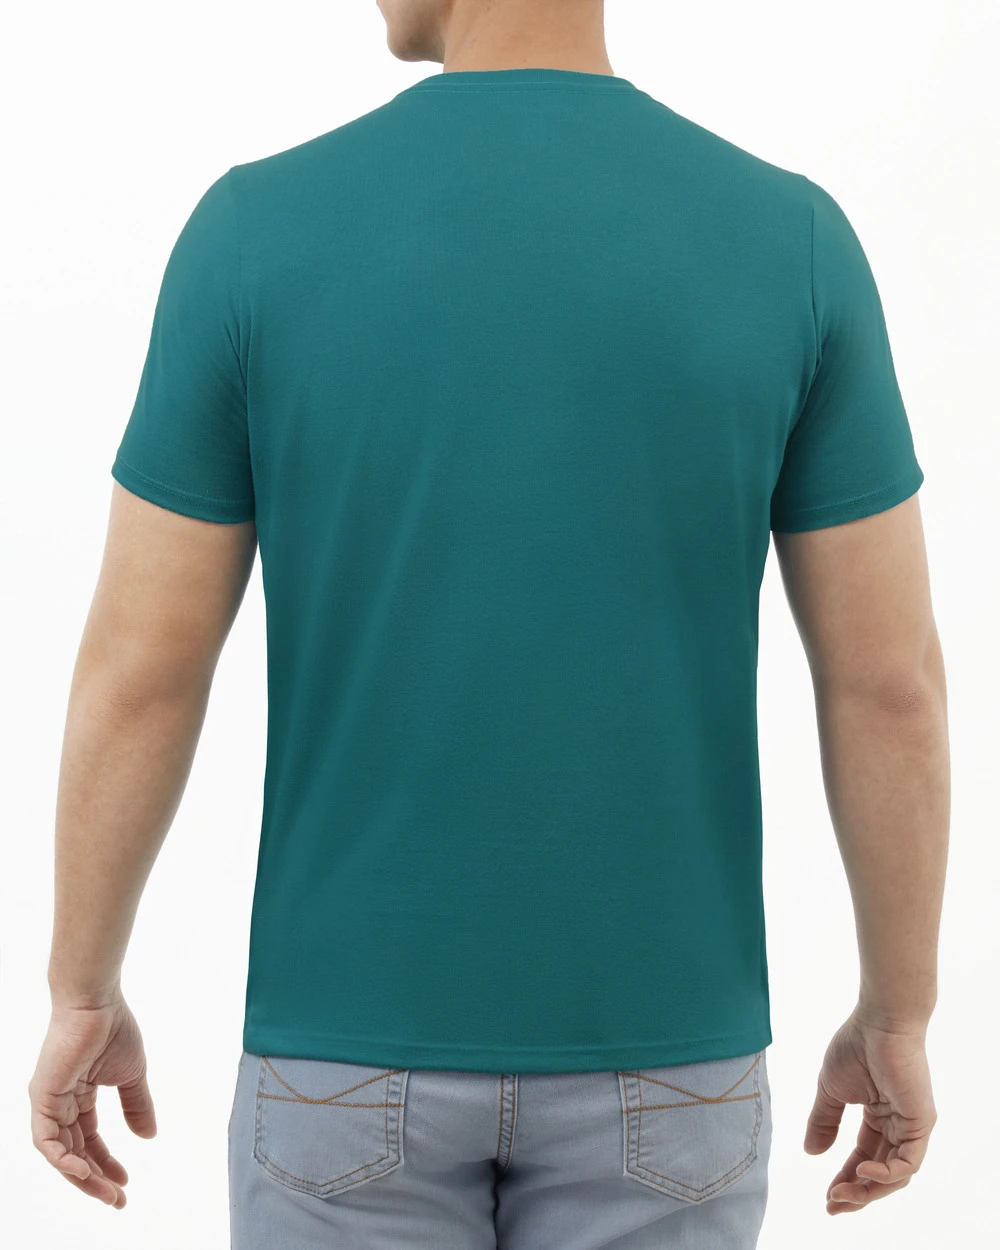 Camiseta cuello redondo lisa manga corta verde con bolsa